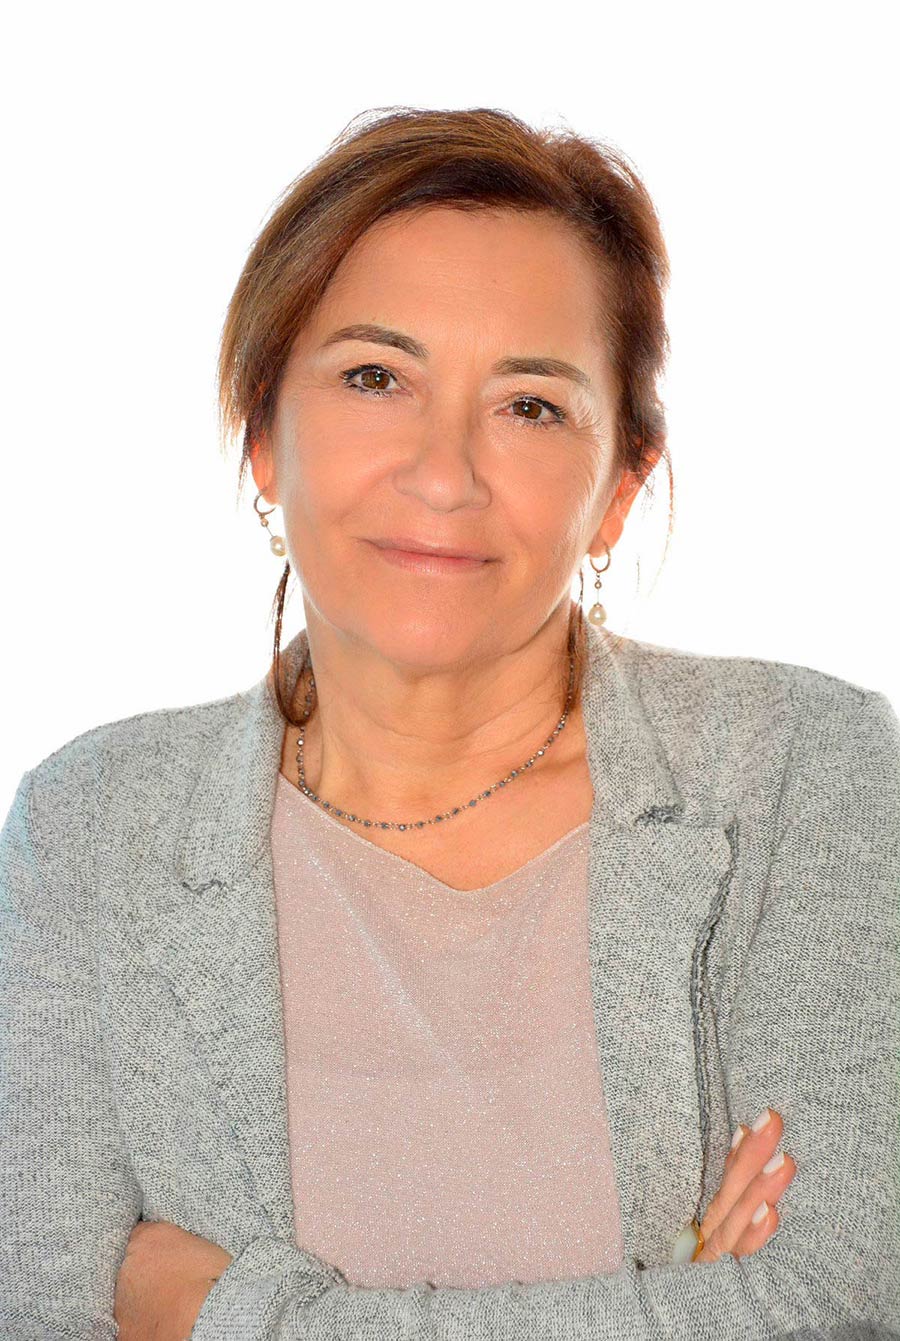 Dott.ssa Linda Mazzaferro, psicologa e psicoterapeuta